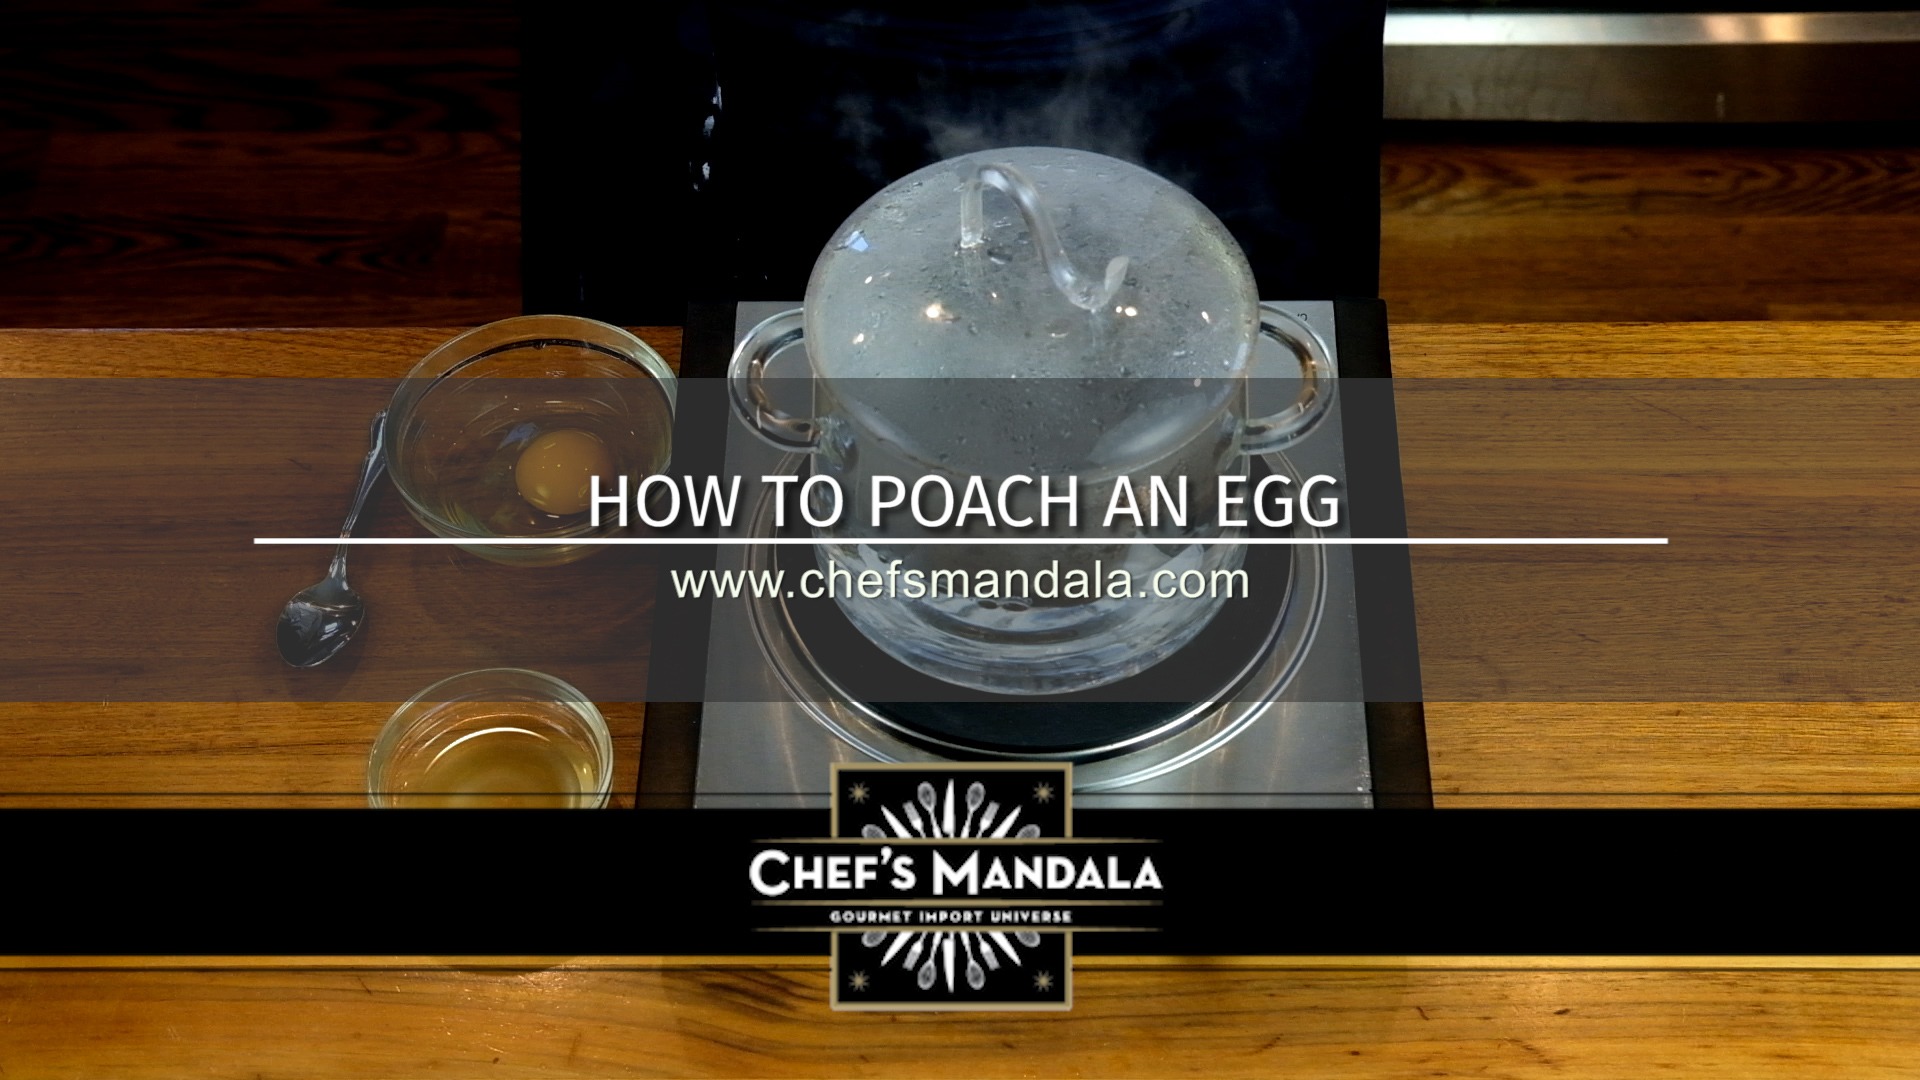 How to poach an egg